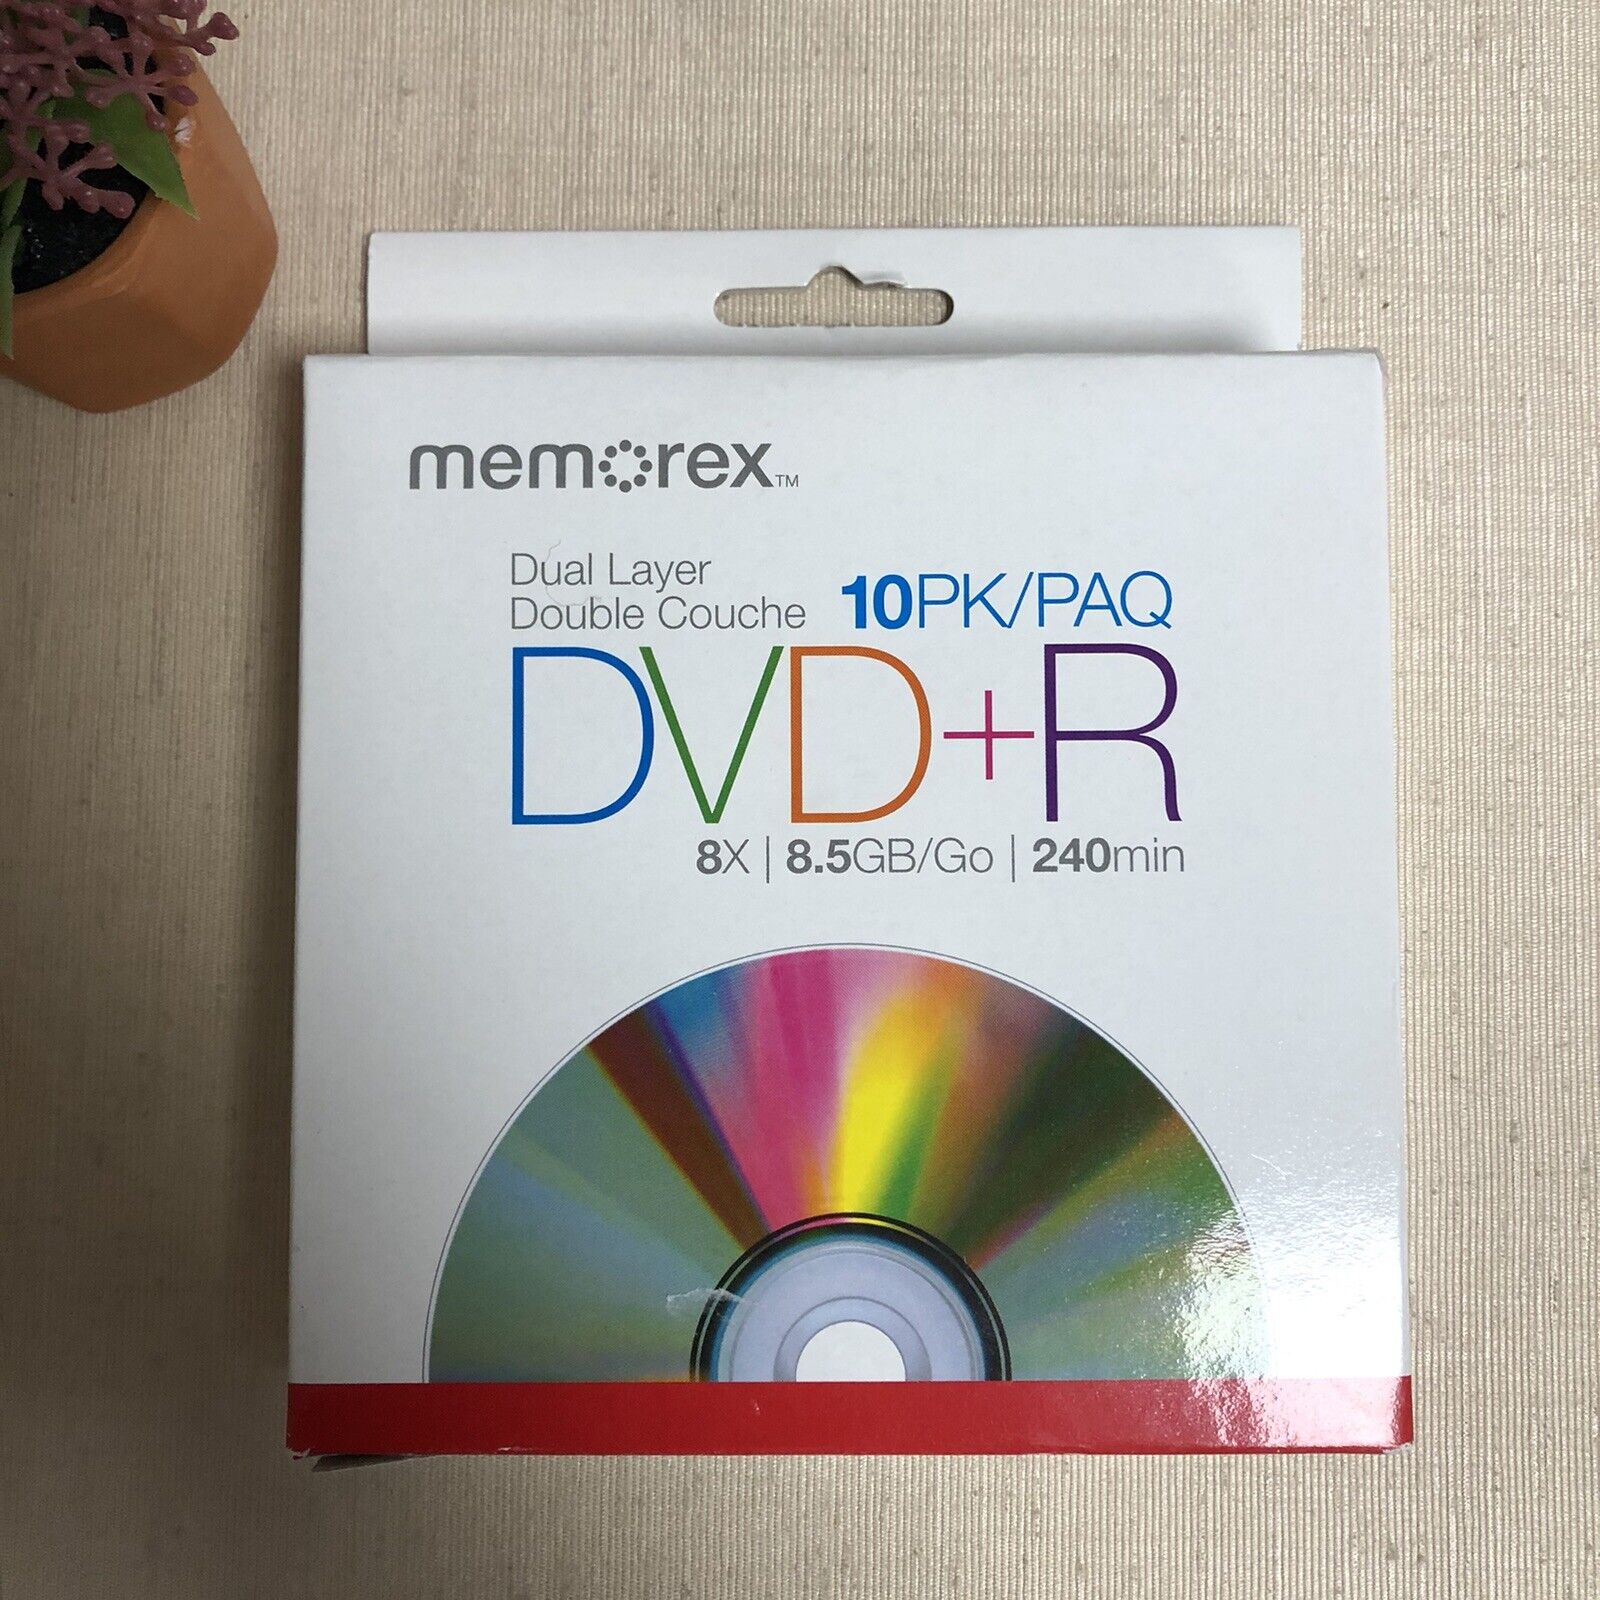 Memorex Dual Layer DVD+R 10-pack - 8X, 8.5GB, 240 mins